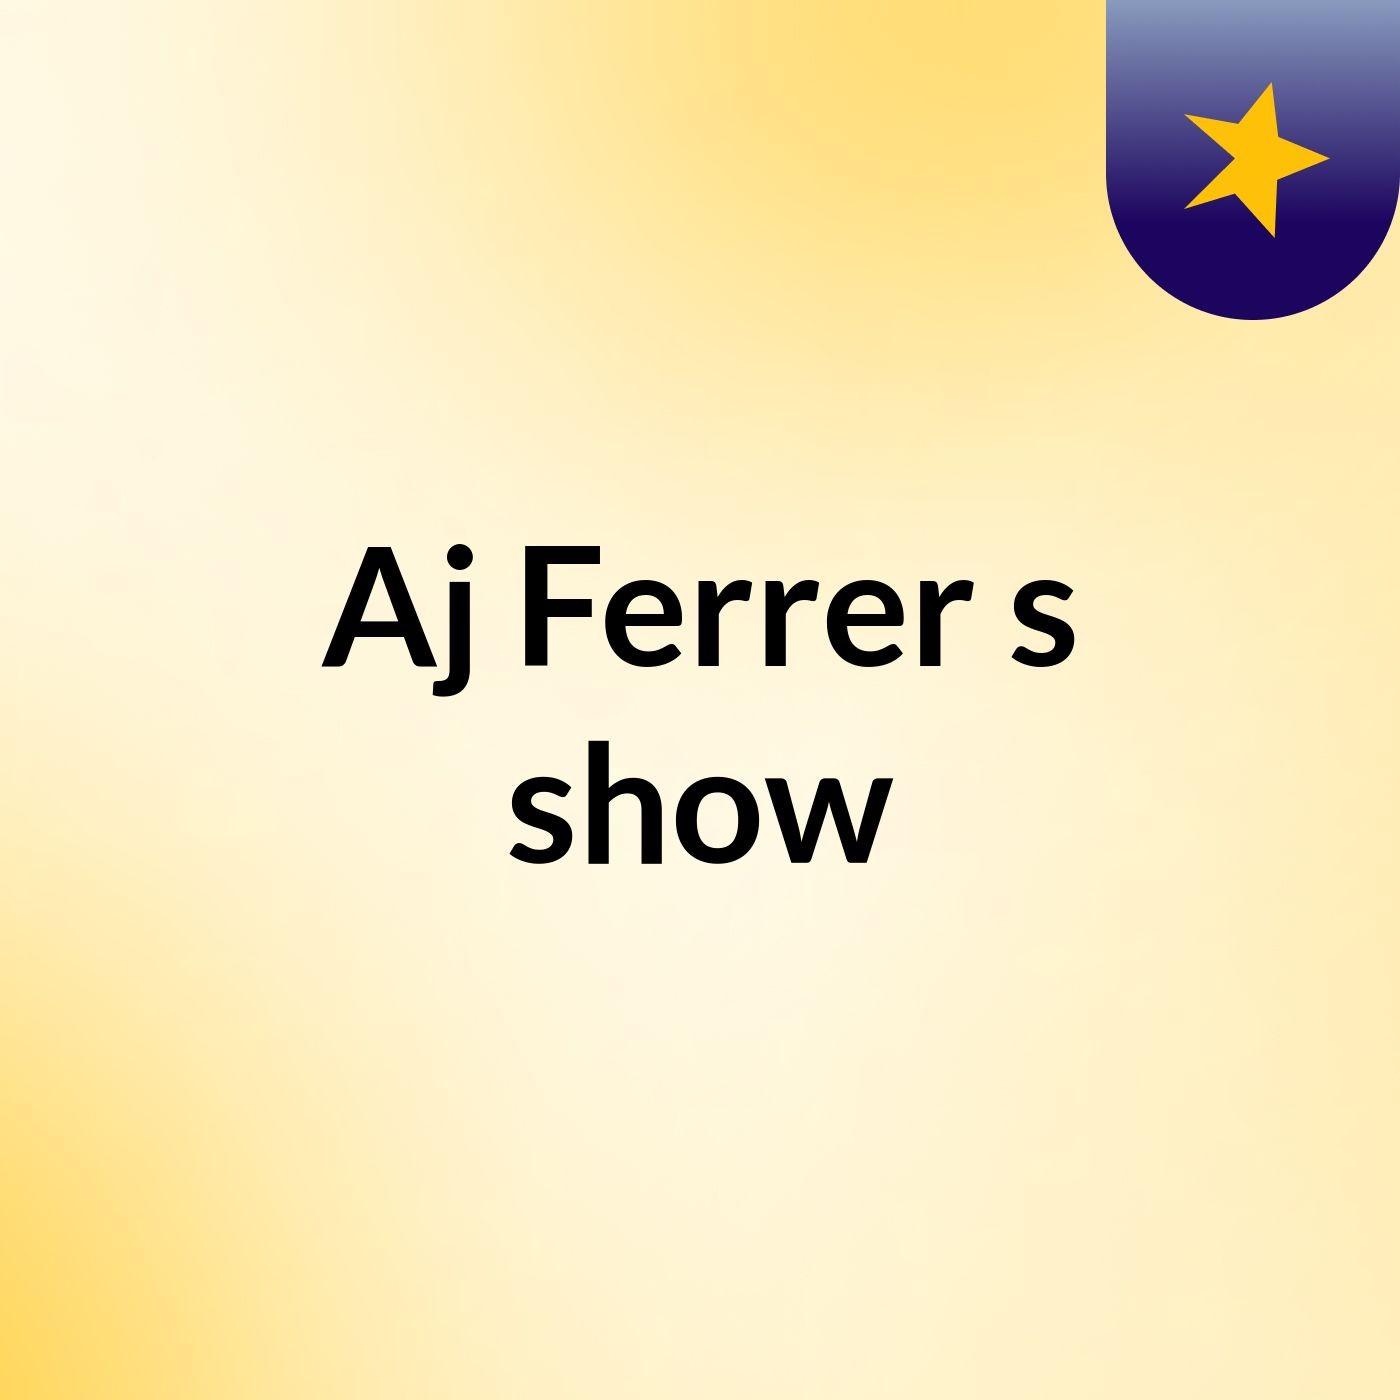 Aj Ferrer's show